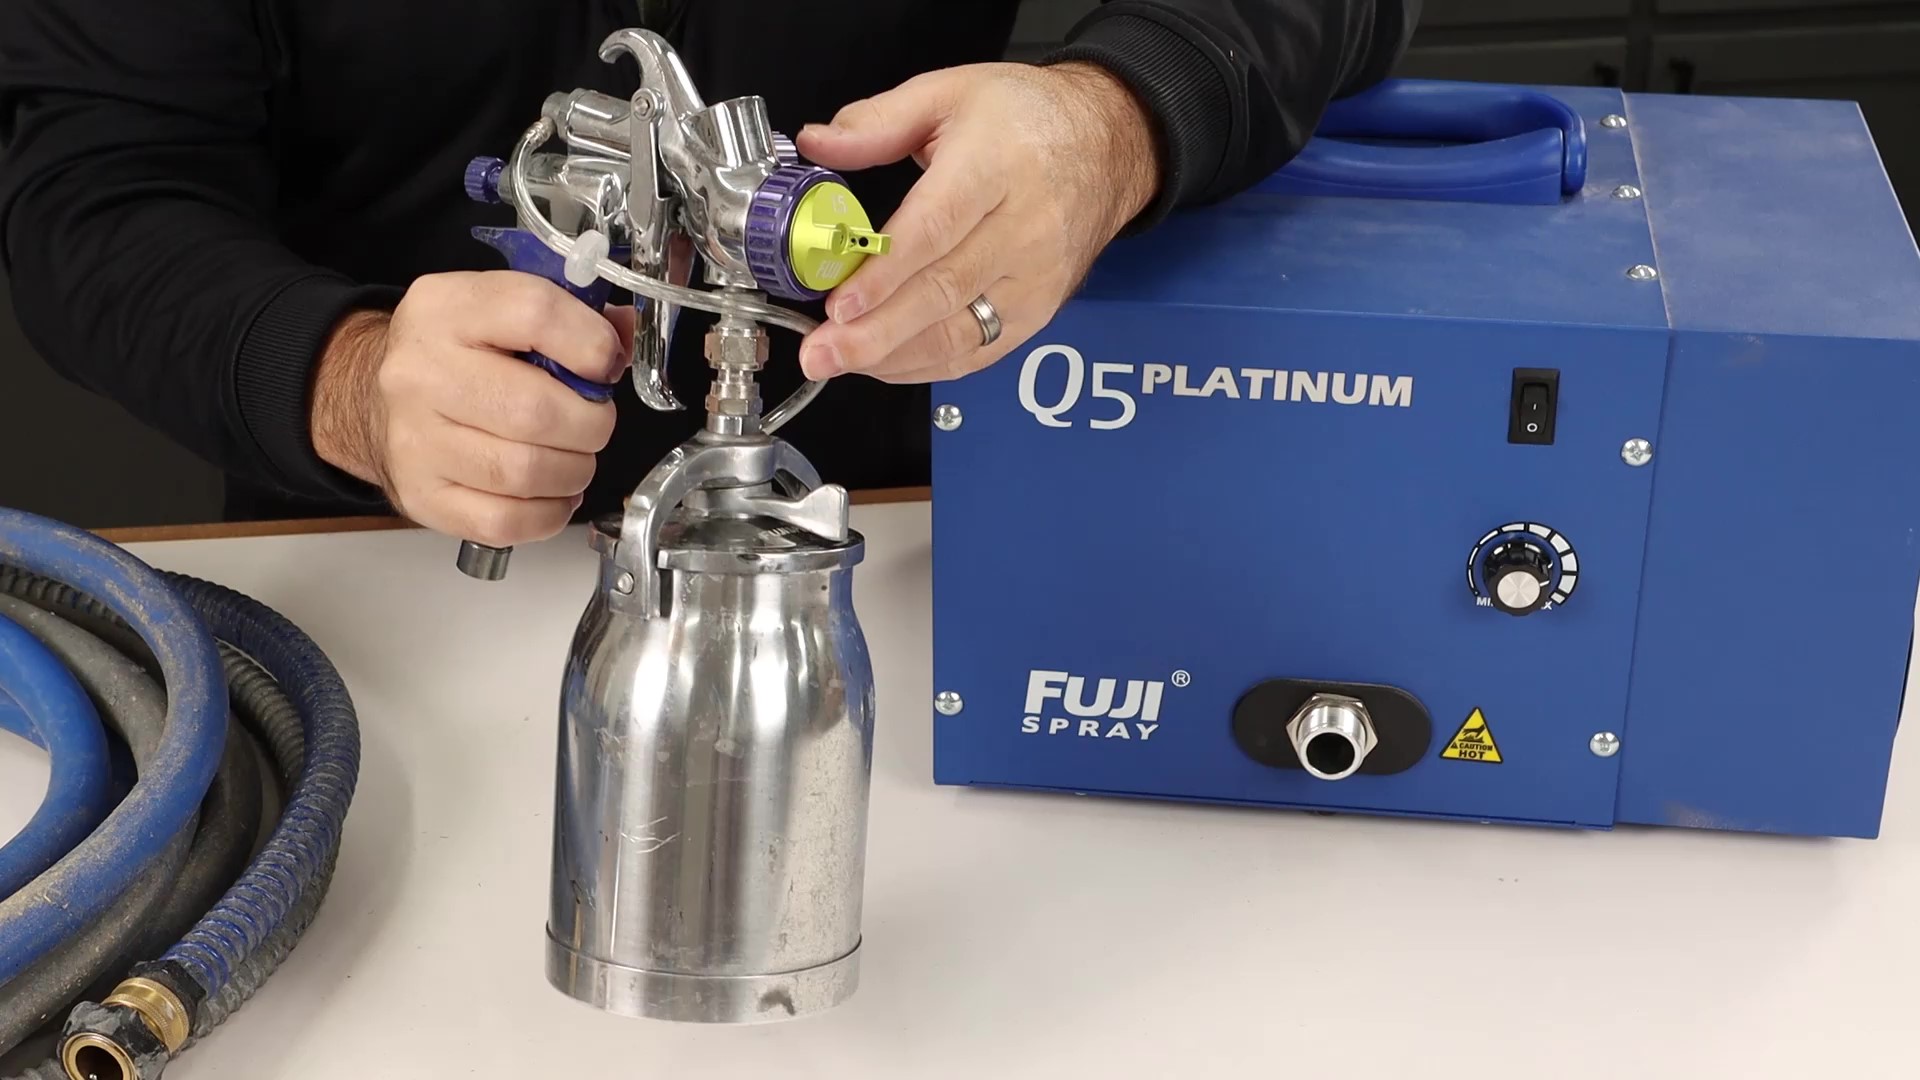 Q5 Platinum HVLP spray system with a T70 bottom feed spray gun